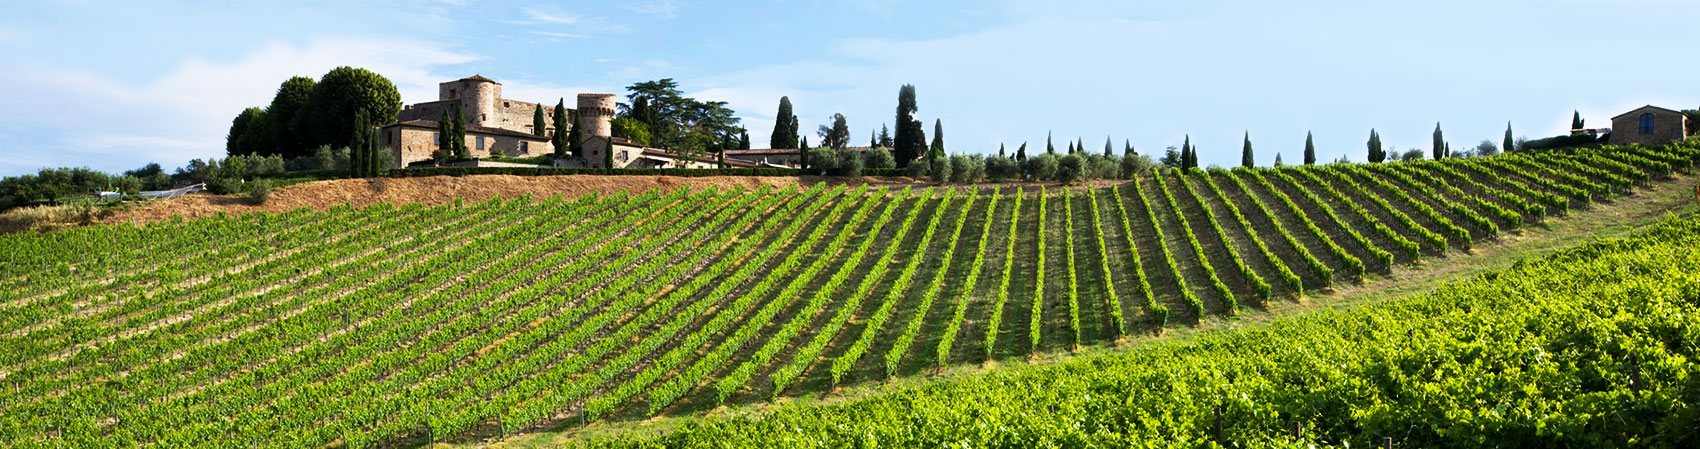 Chianti, Tuscany: view of a vineyard